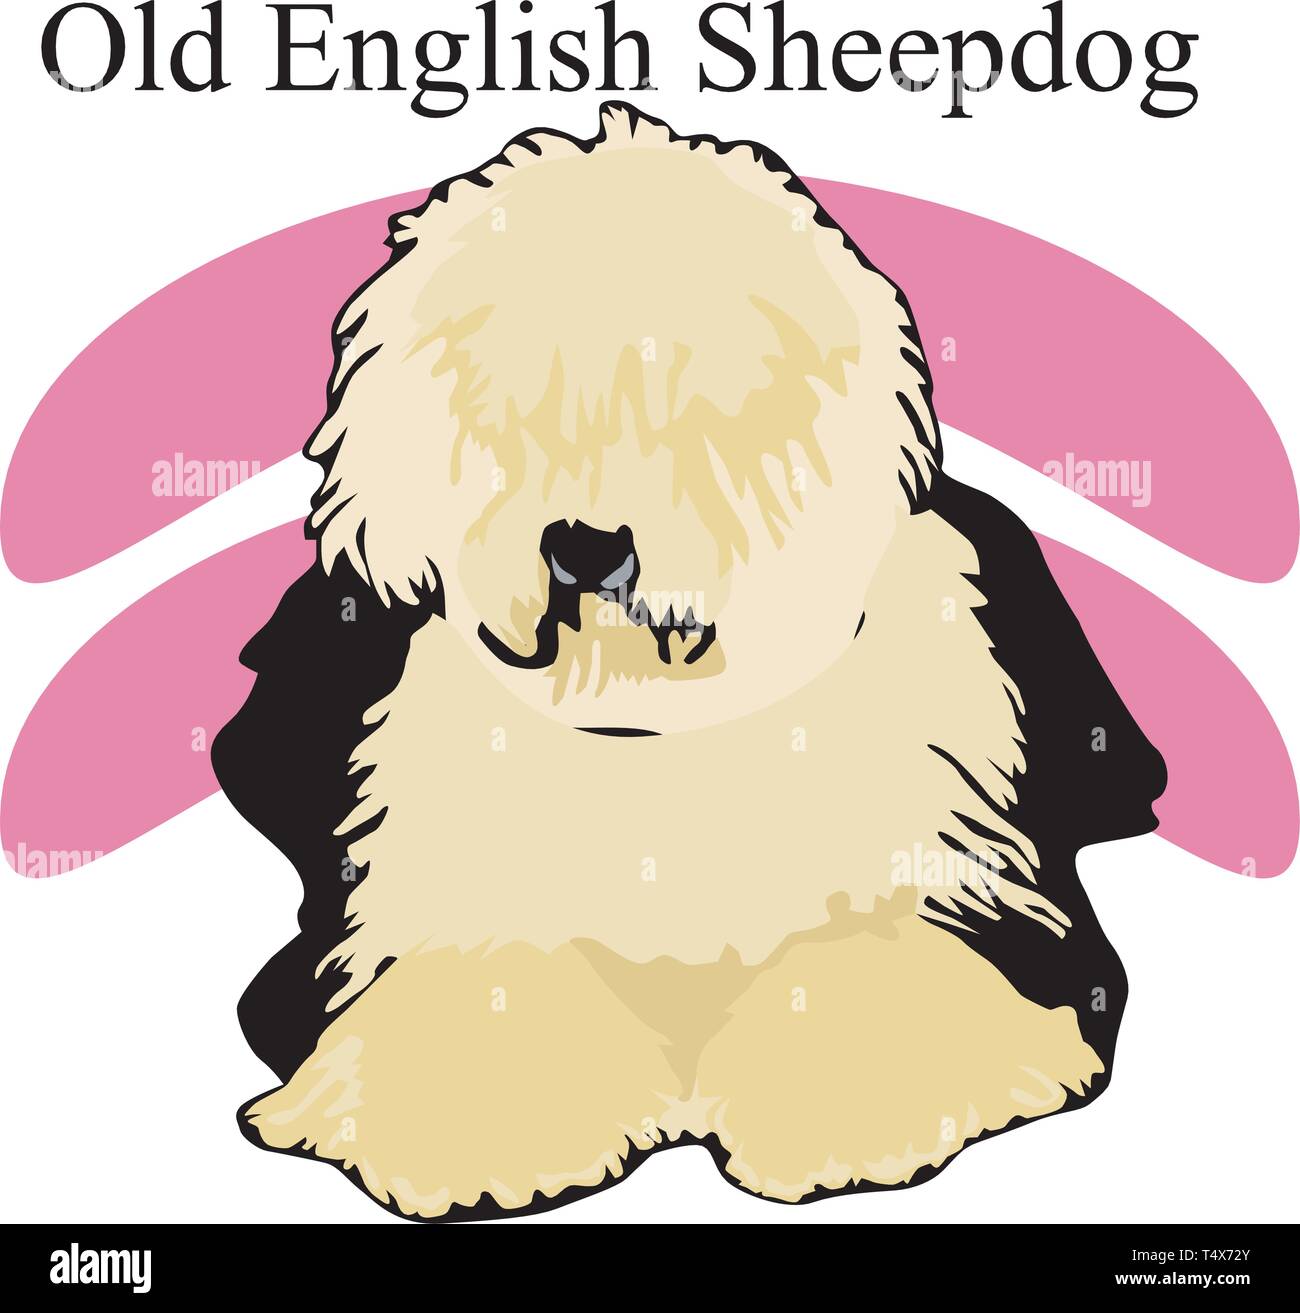 Old English Sheepdog Vector Illustration Royalty Free SVG, Cliparts,  Vectors, and Stock Illustration. Image 87466834.